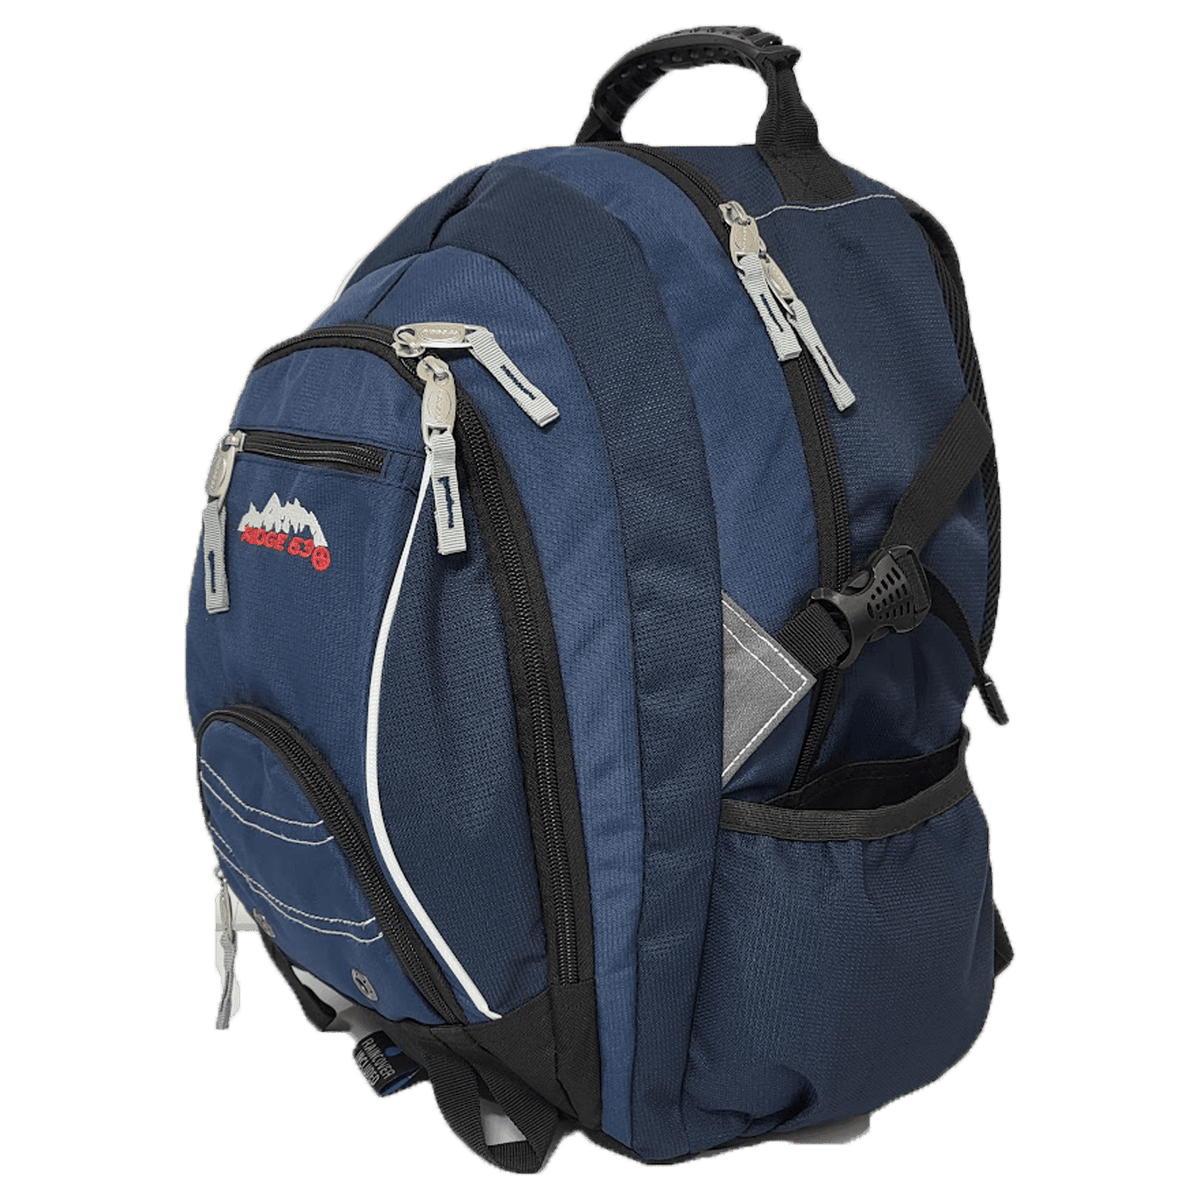 Ridge 53 – Bolton Backpack - Navy